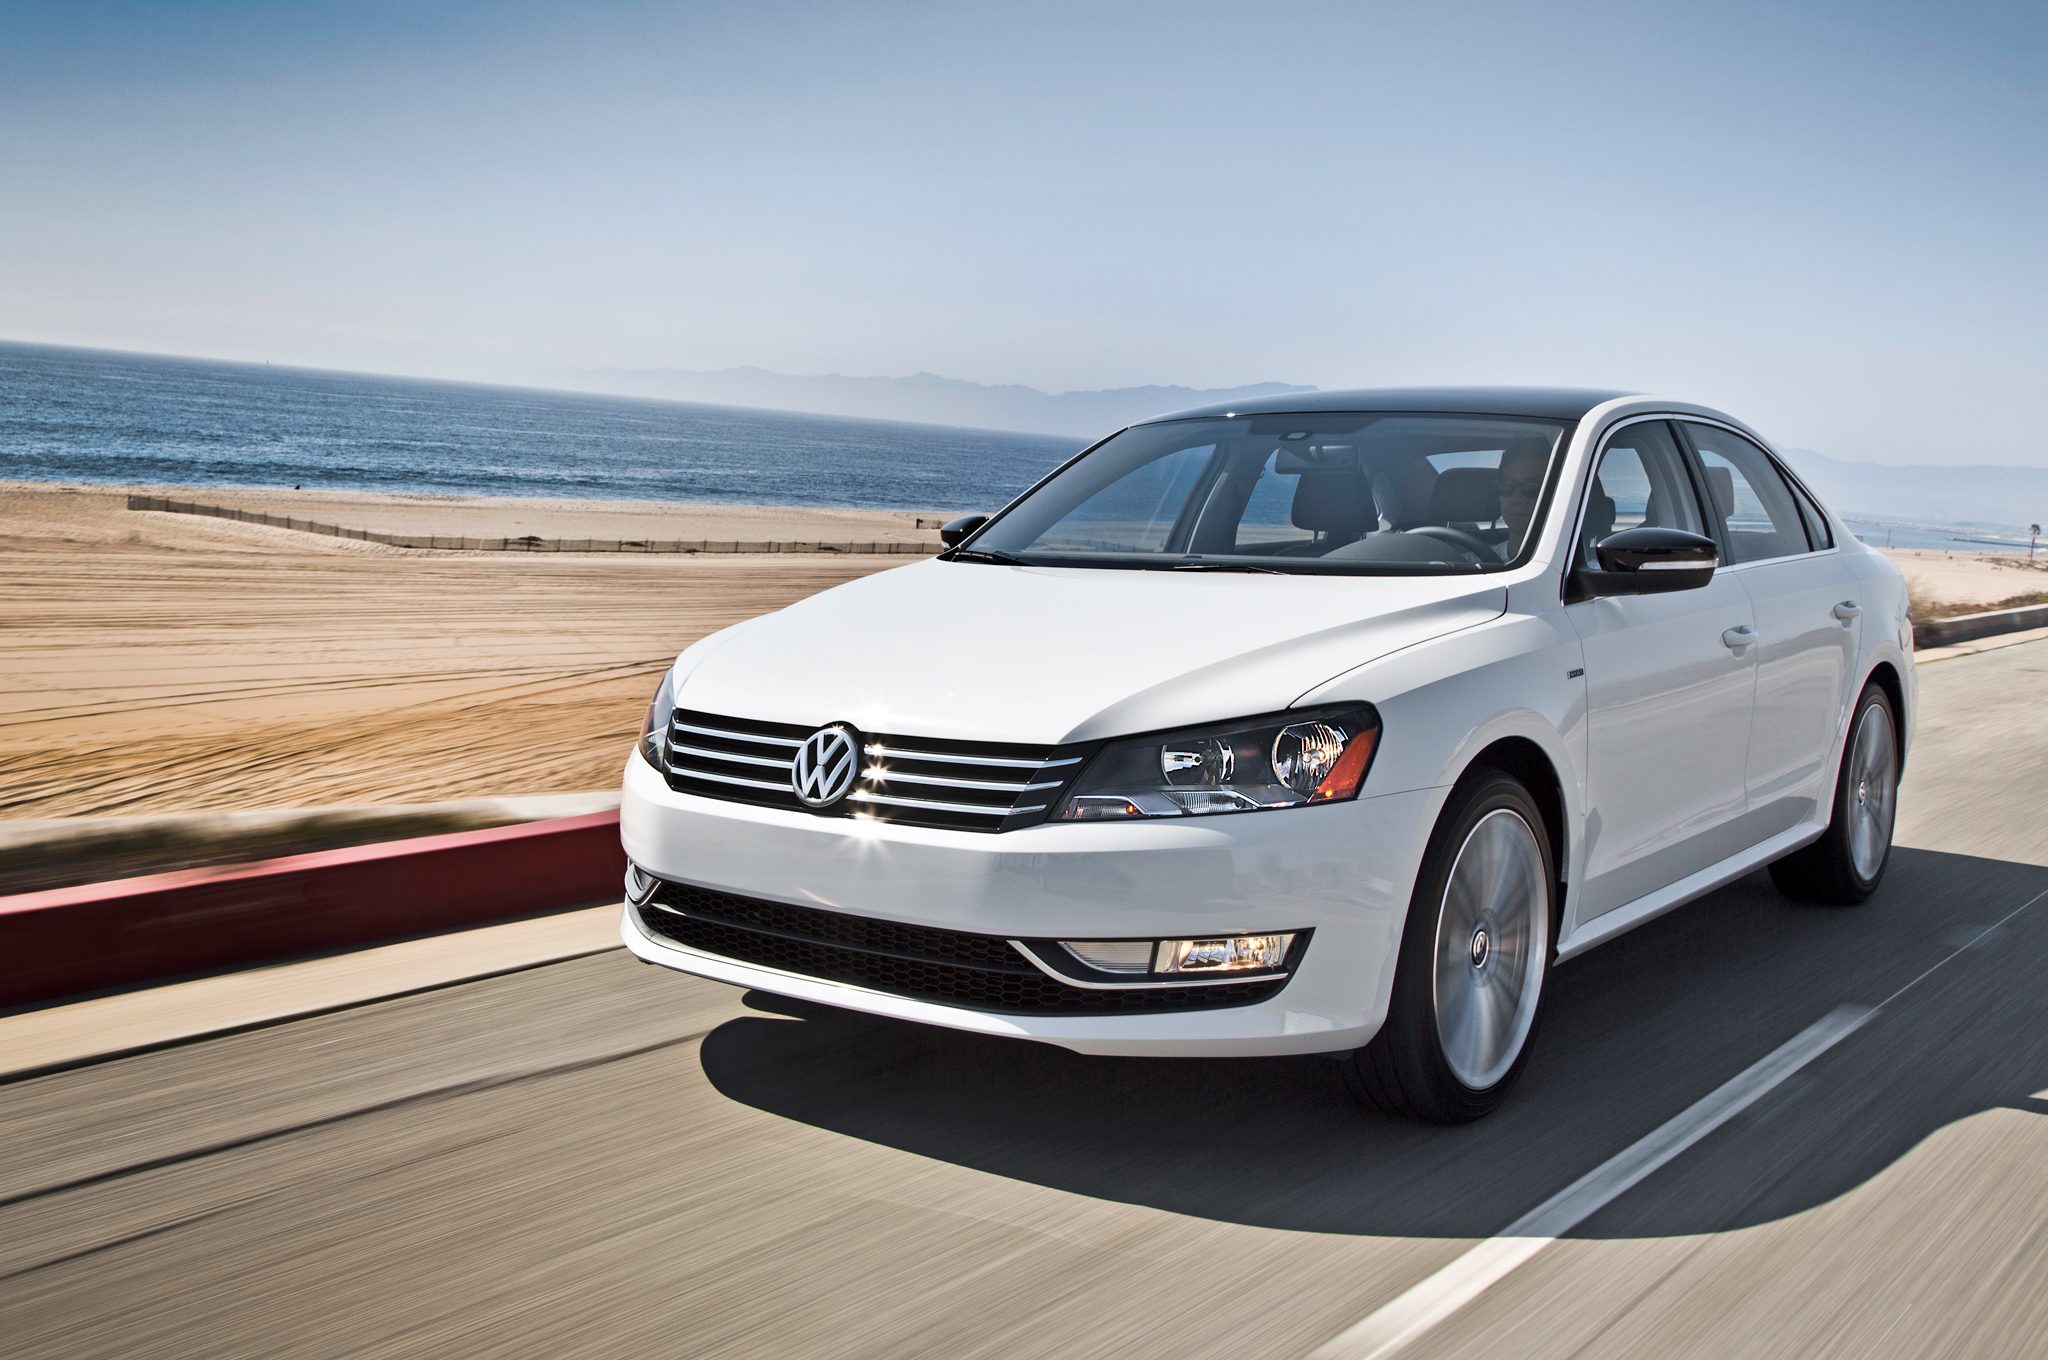 2014-Volkswagen-Passat-Sport-front-three-quarter-in-motion.jpg